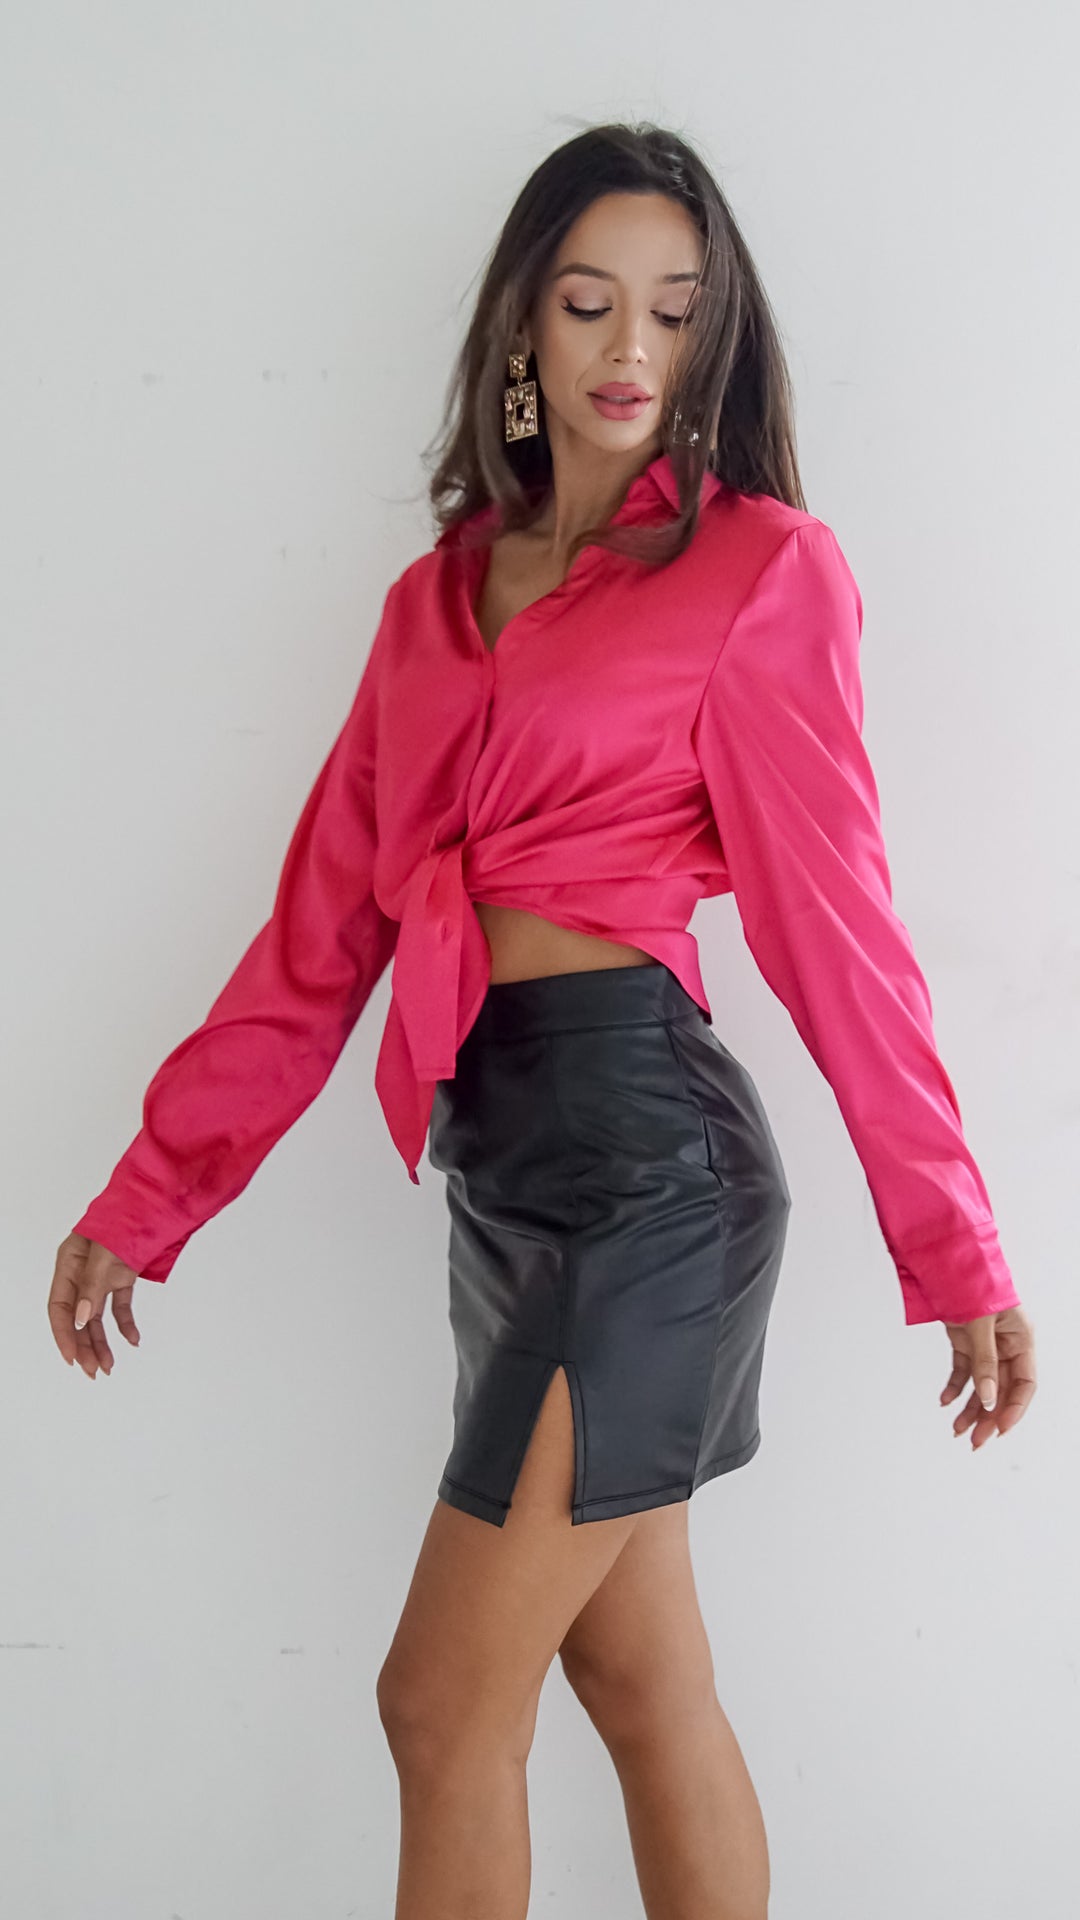 Eveine Satin Longsleeve Top in Hot Pink - Steps New York